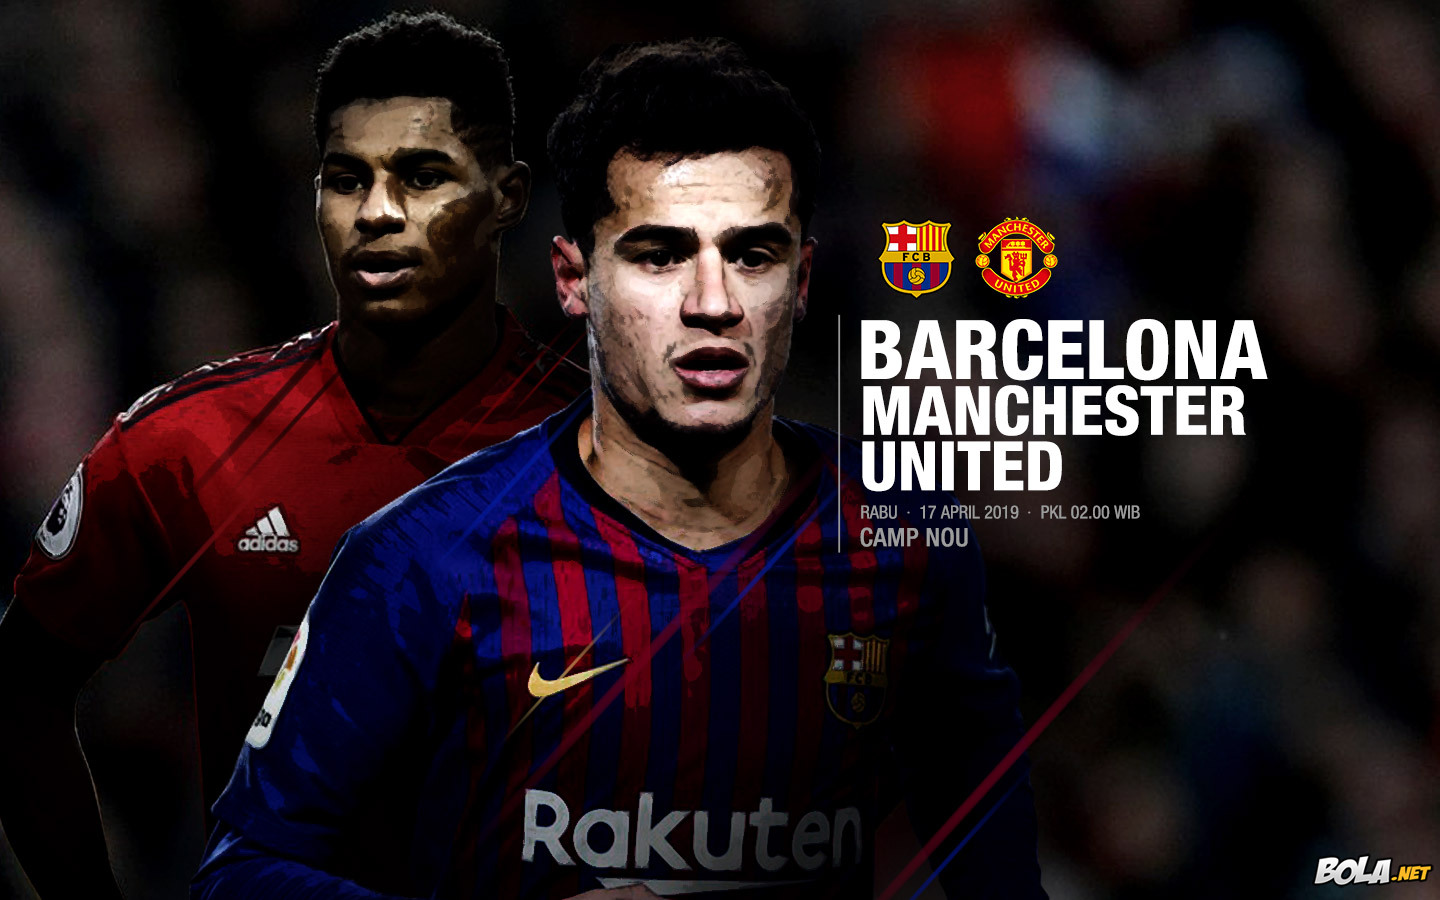 Deskripsi : Wallpaper Barcelona Vs Manchester United, size: 1440x900